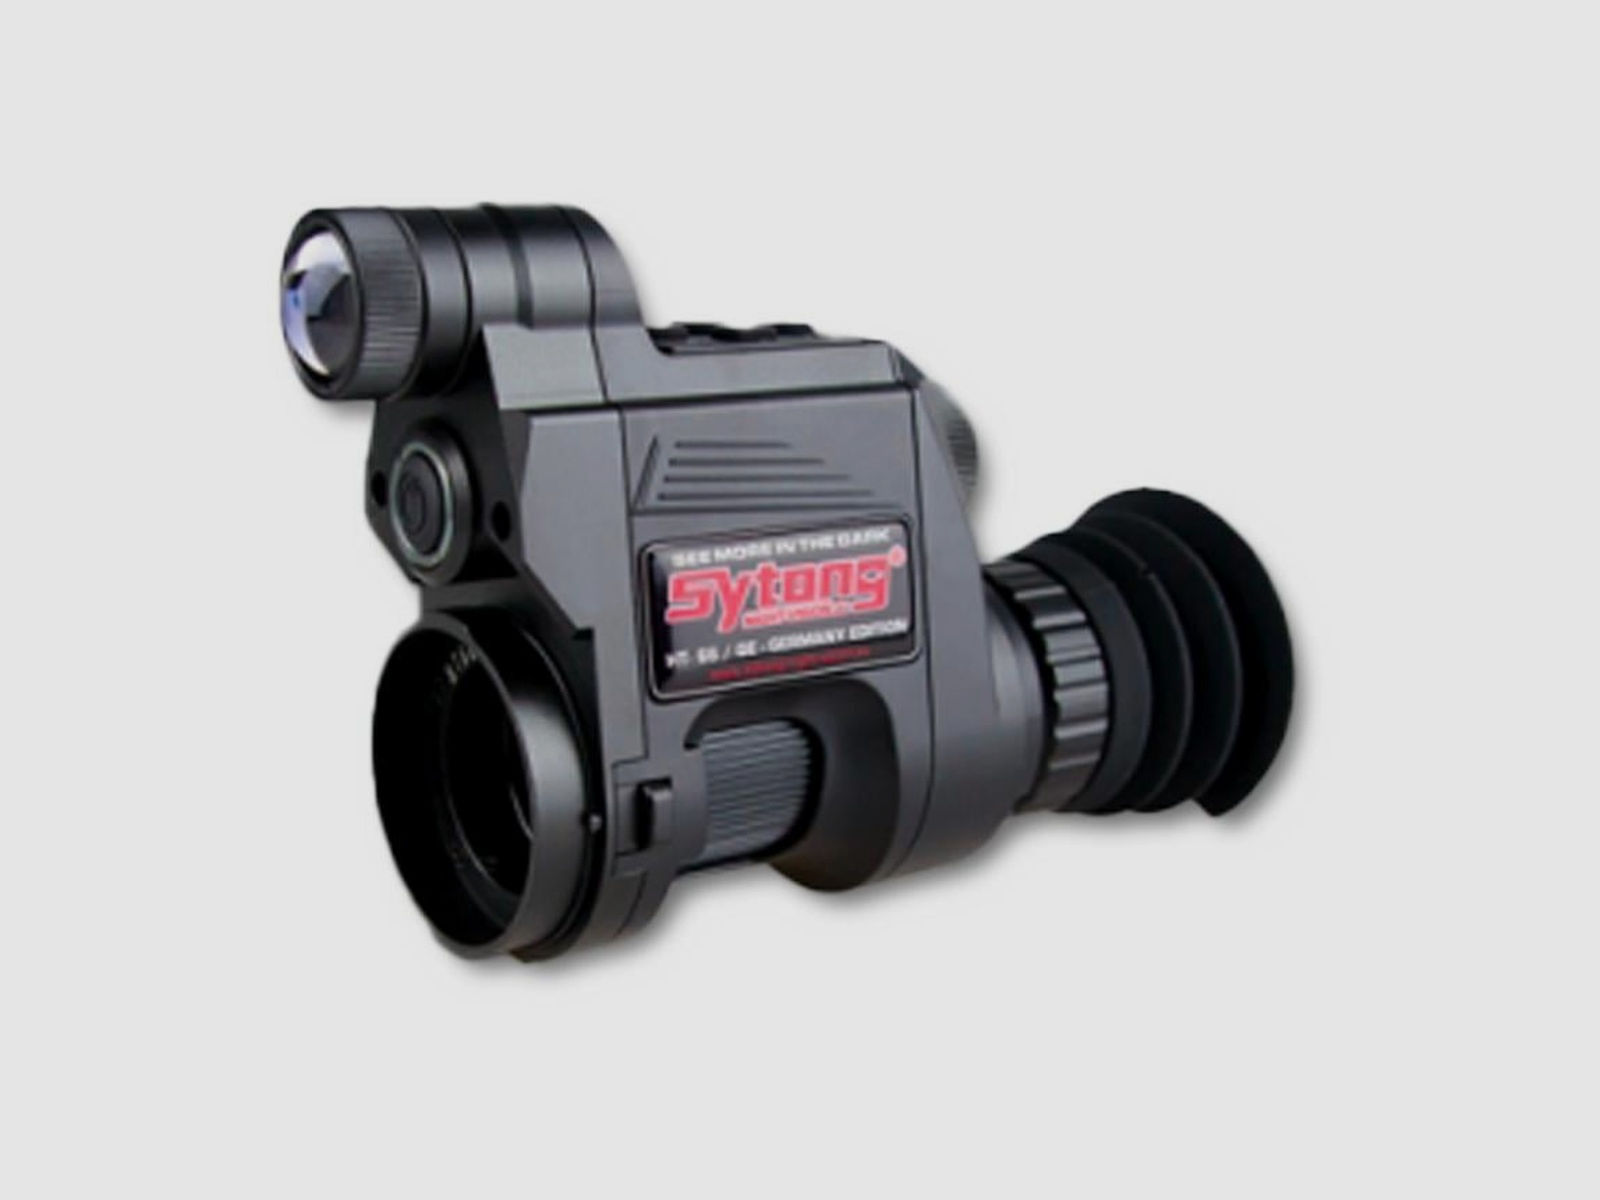 Sytong Night Vision Nachtsichtgerät HT-66 -NV850 mit 16 mm Objektiv Deutschland Edition / OLED-Werkset Schwarz